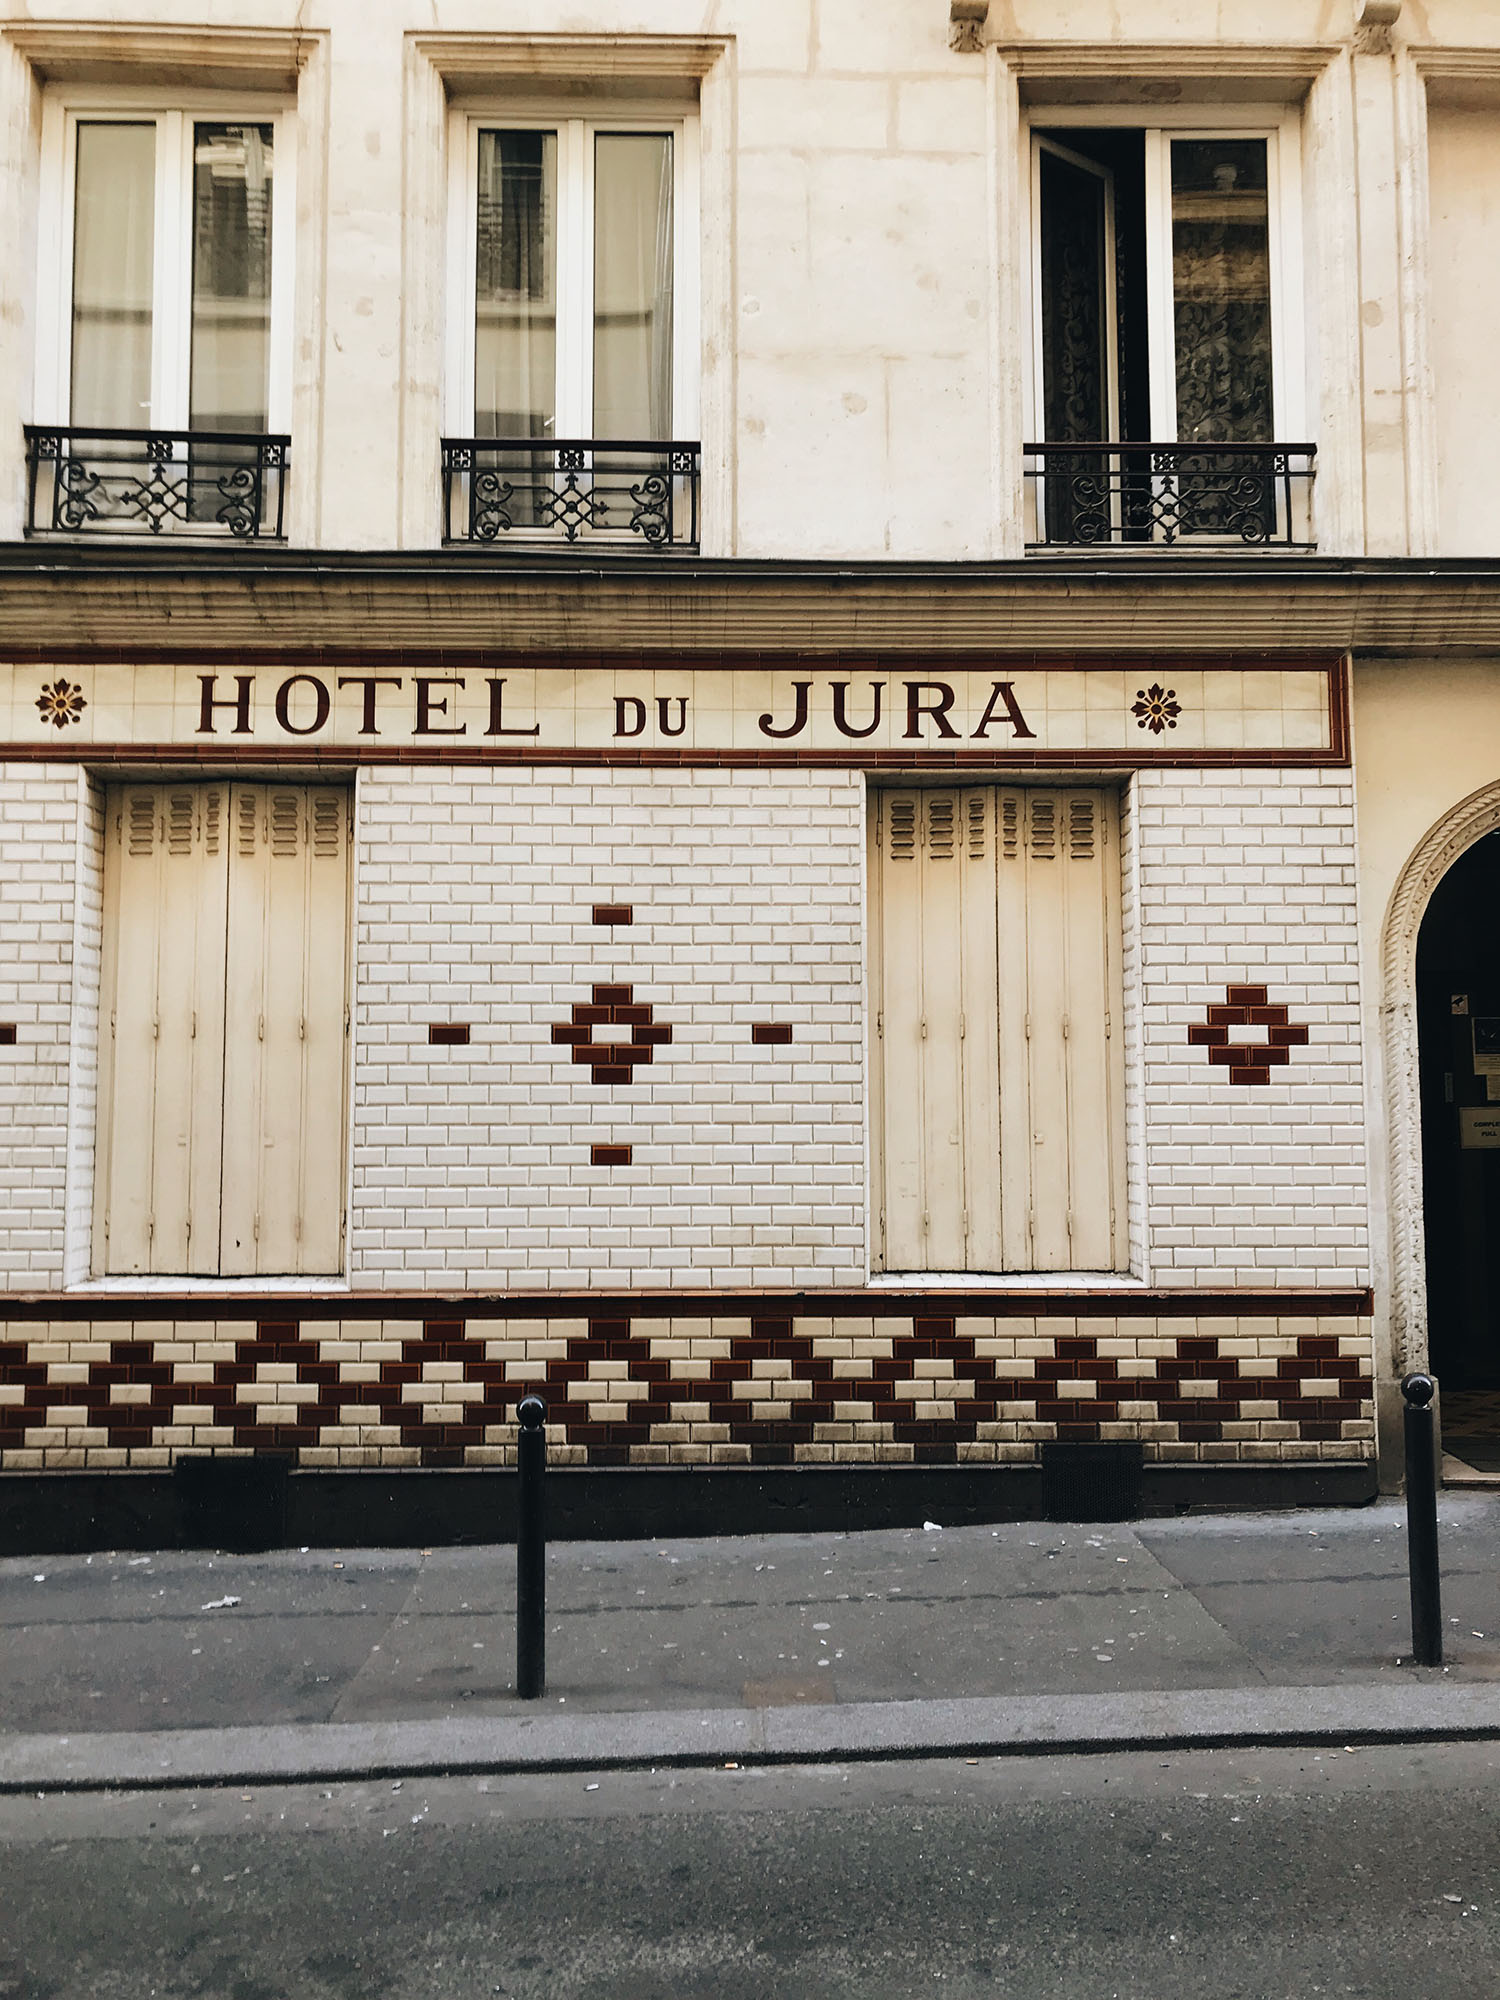 The Hotel de Jura in Paris, as captured by top Winnipeg travel blogger Cee Fardoe of Coco & Vera